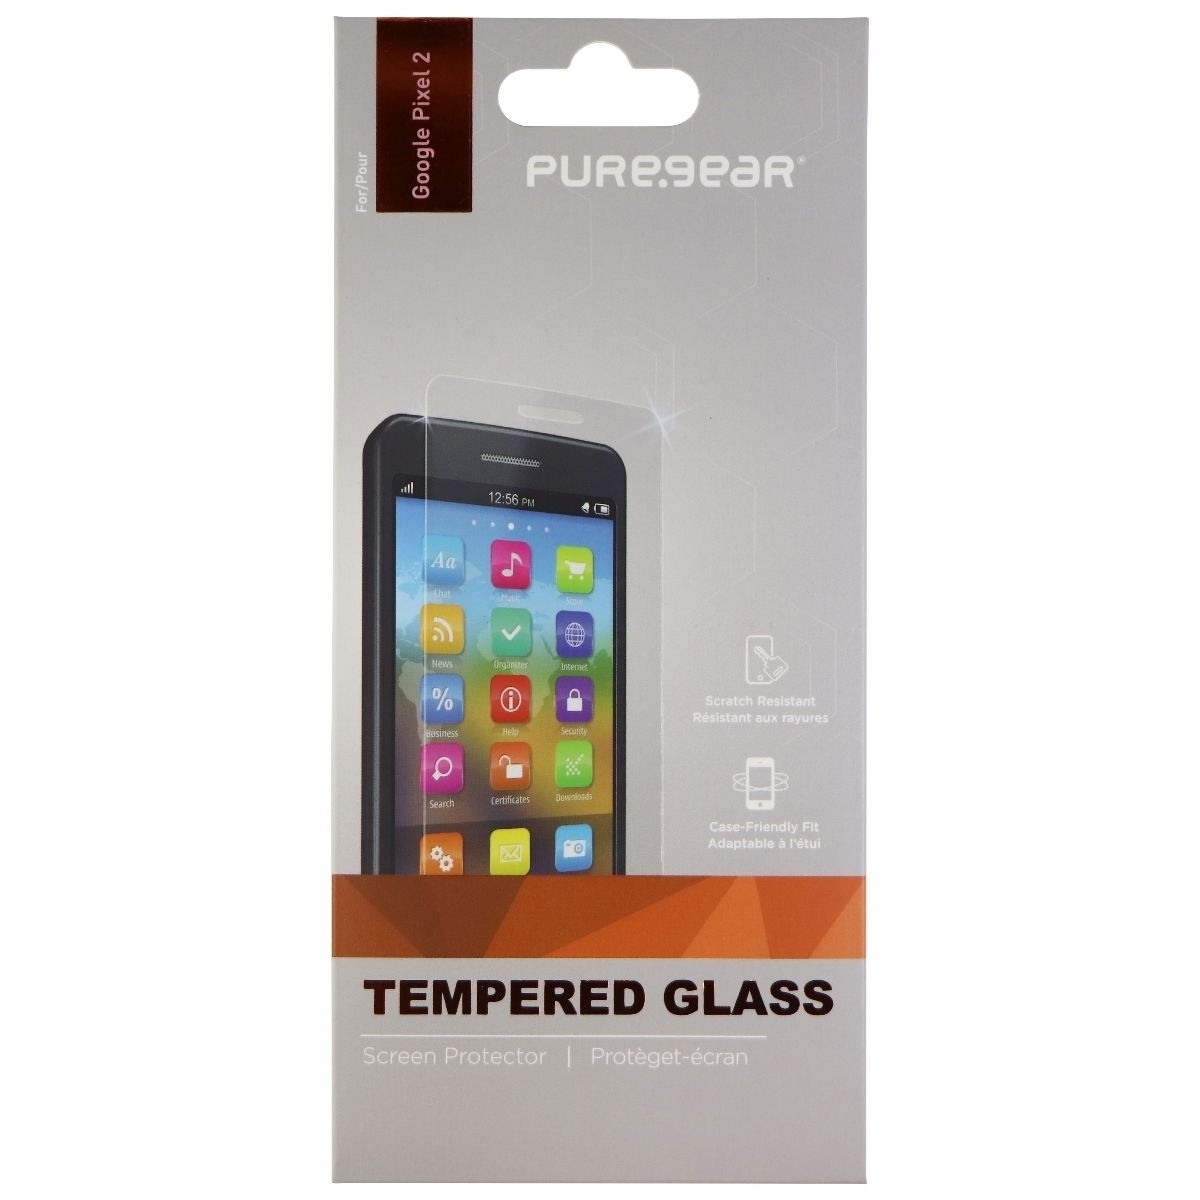 PureGear Tempered Glass Screen Protector Google Pixel 2 Smartphone - Clear